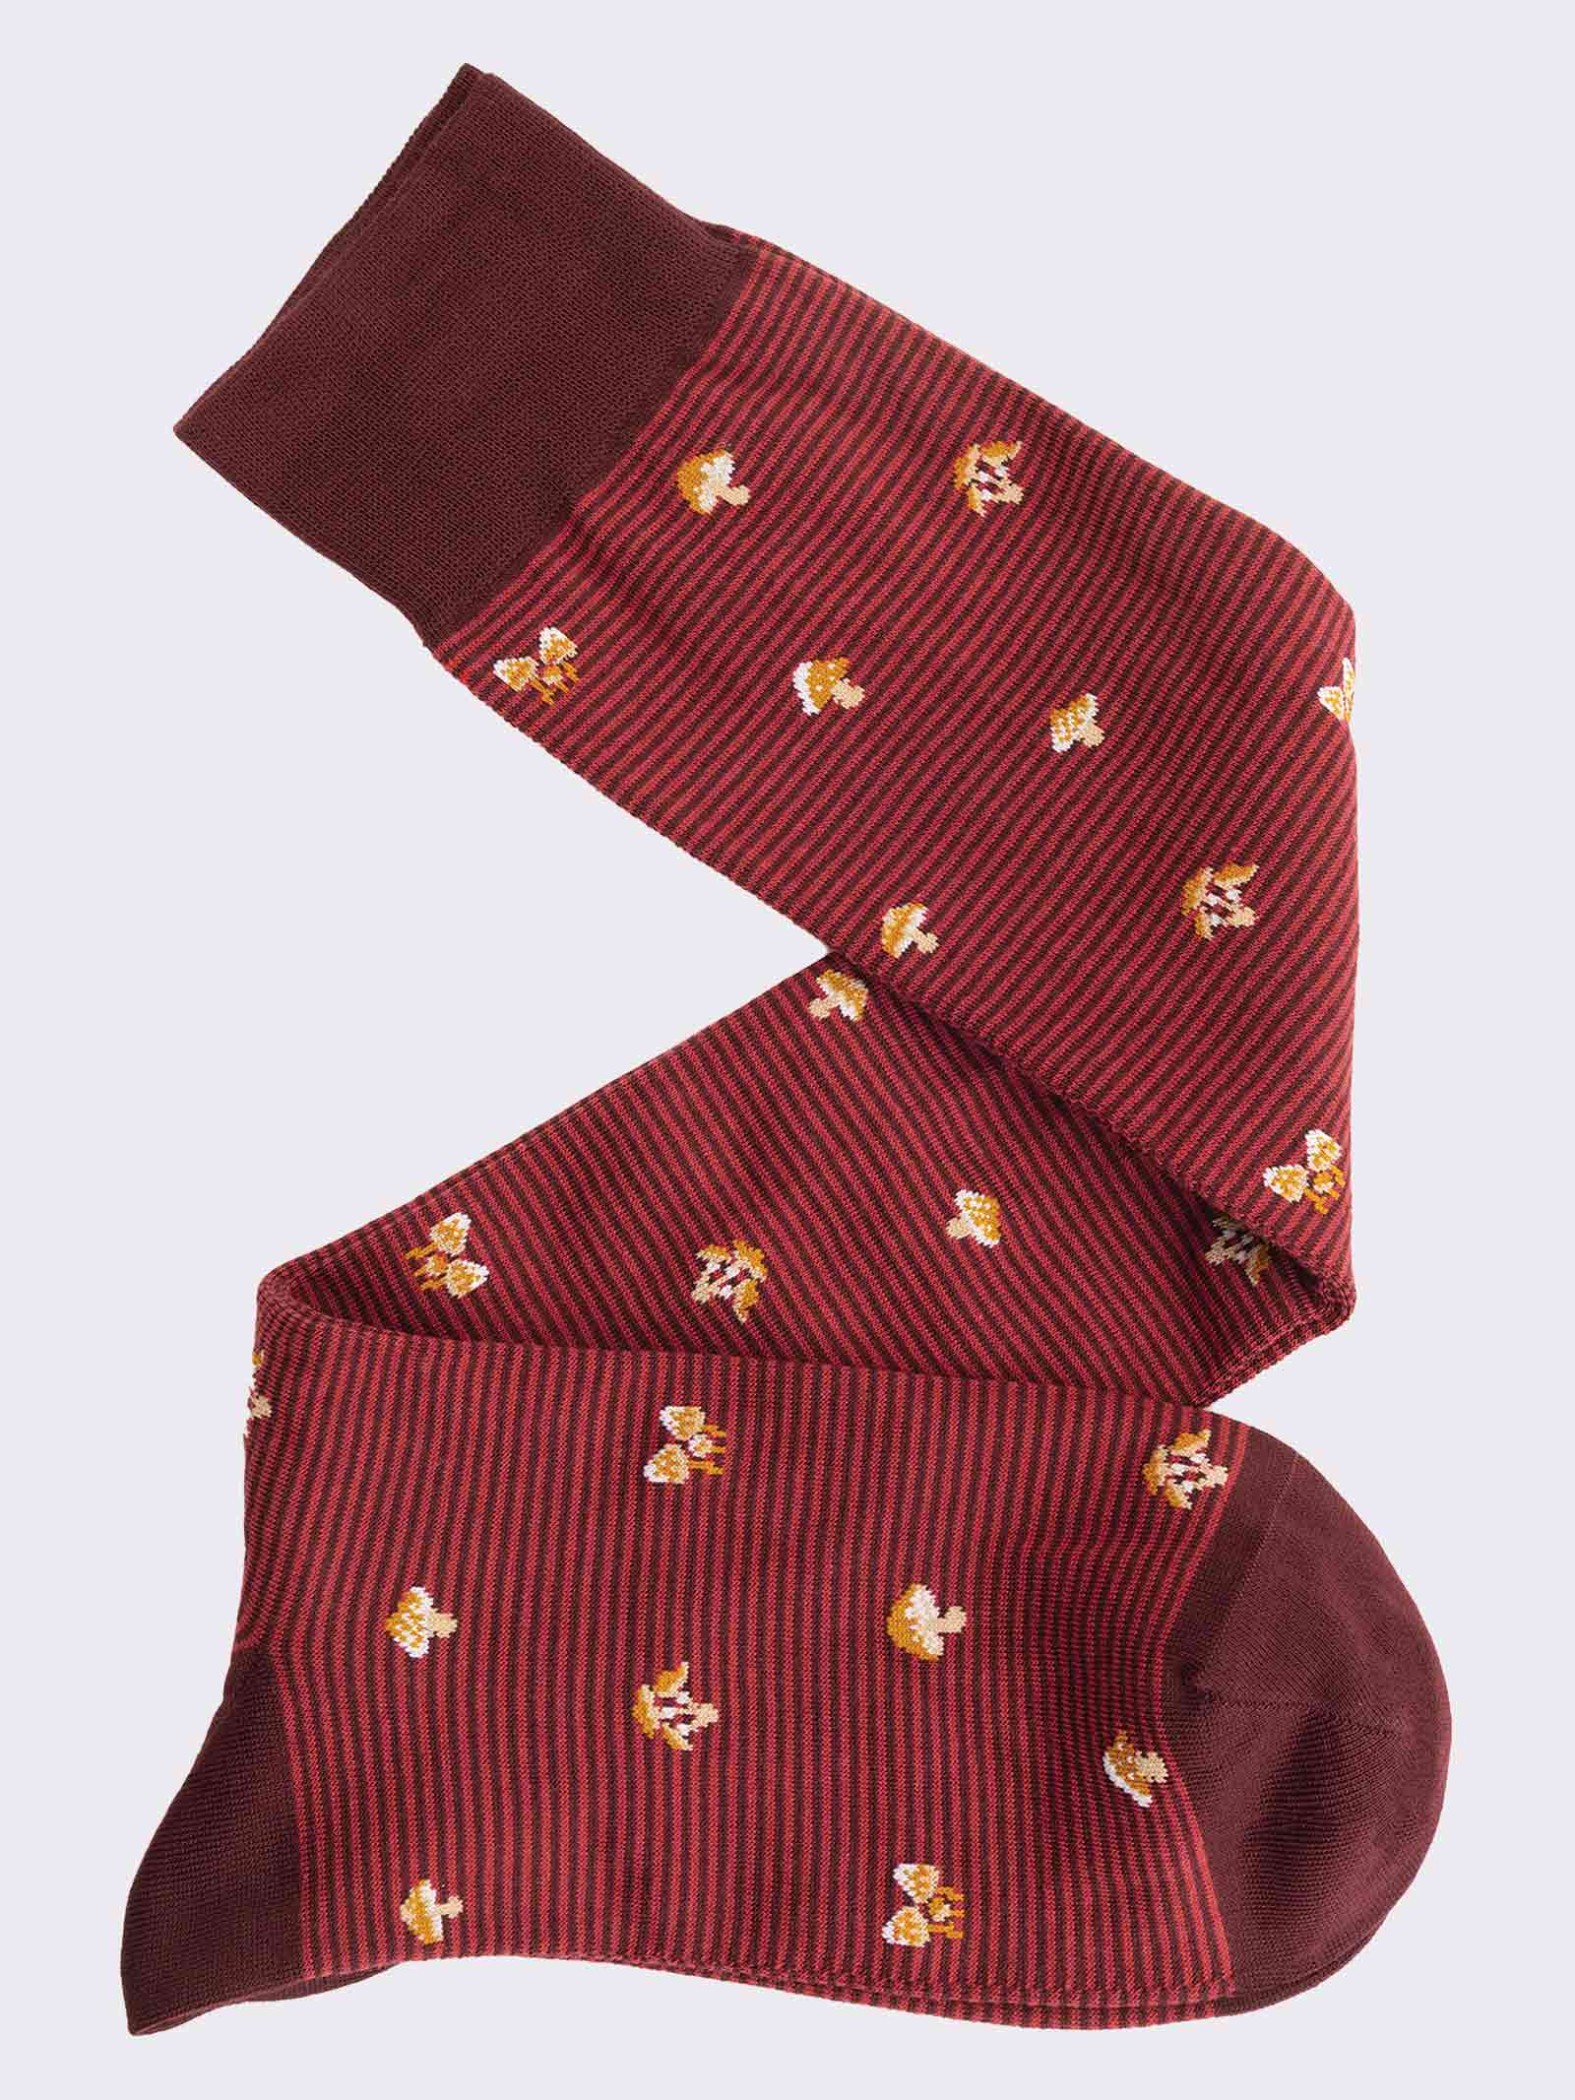 Men's knee high socks with mushroom pattern on stripes in warm cotton